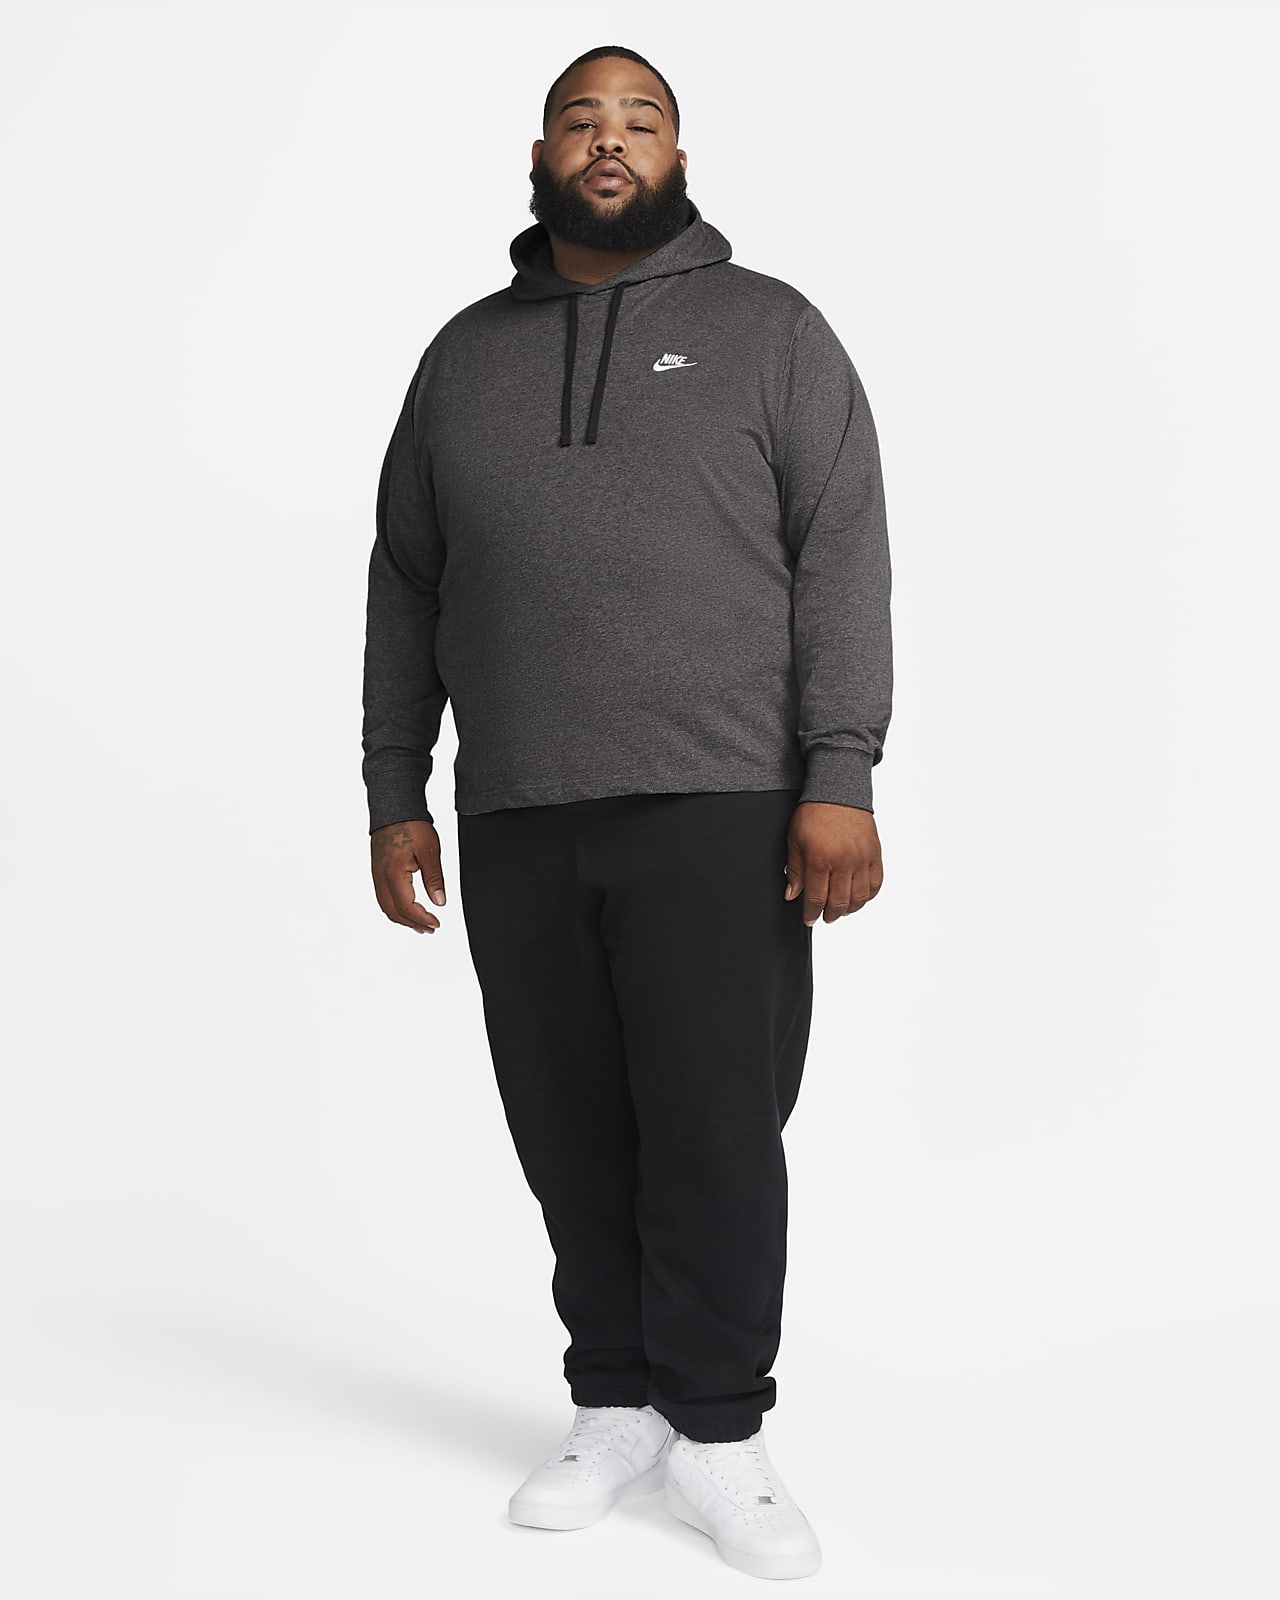 Nike Men's Jersey Pullover Hoodie.